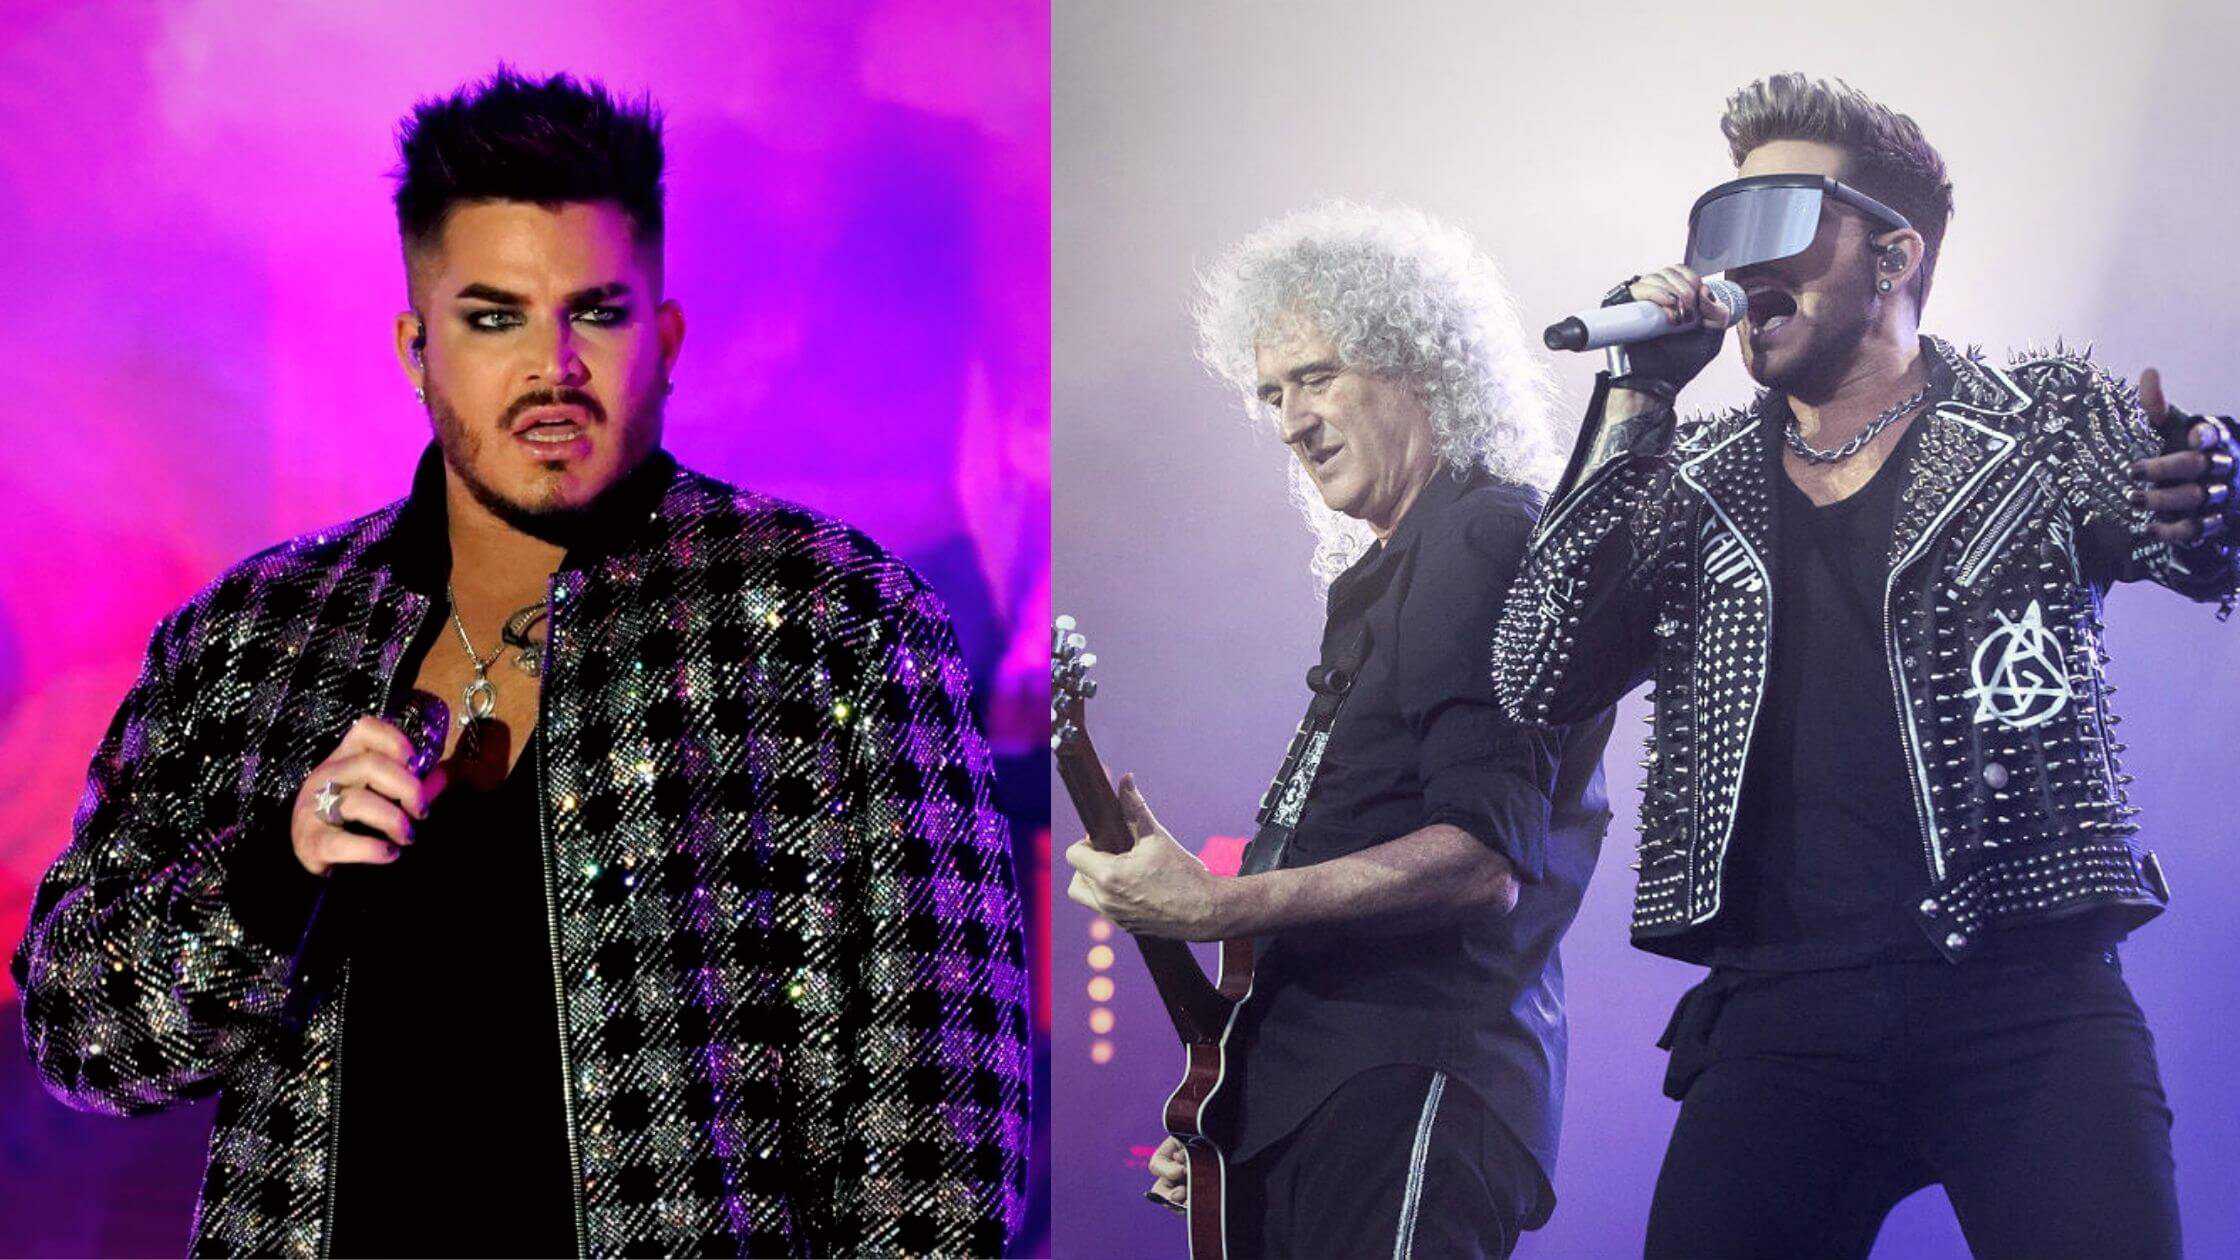 Adam Lambert Experiences Serious Injury While Filming Album Cover